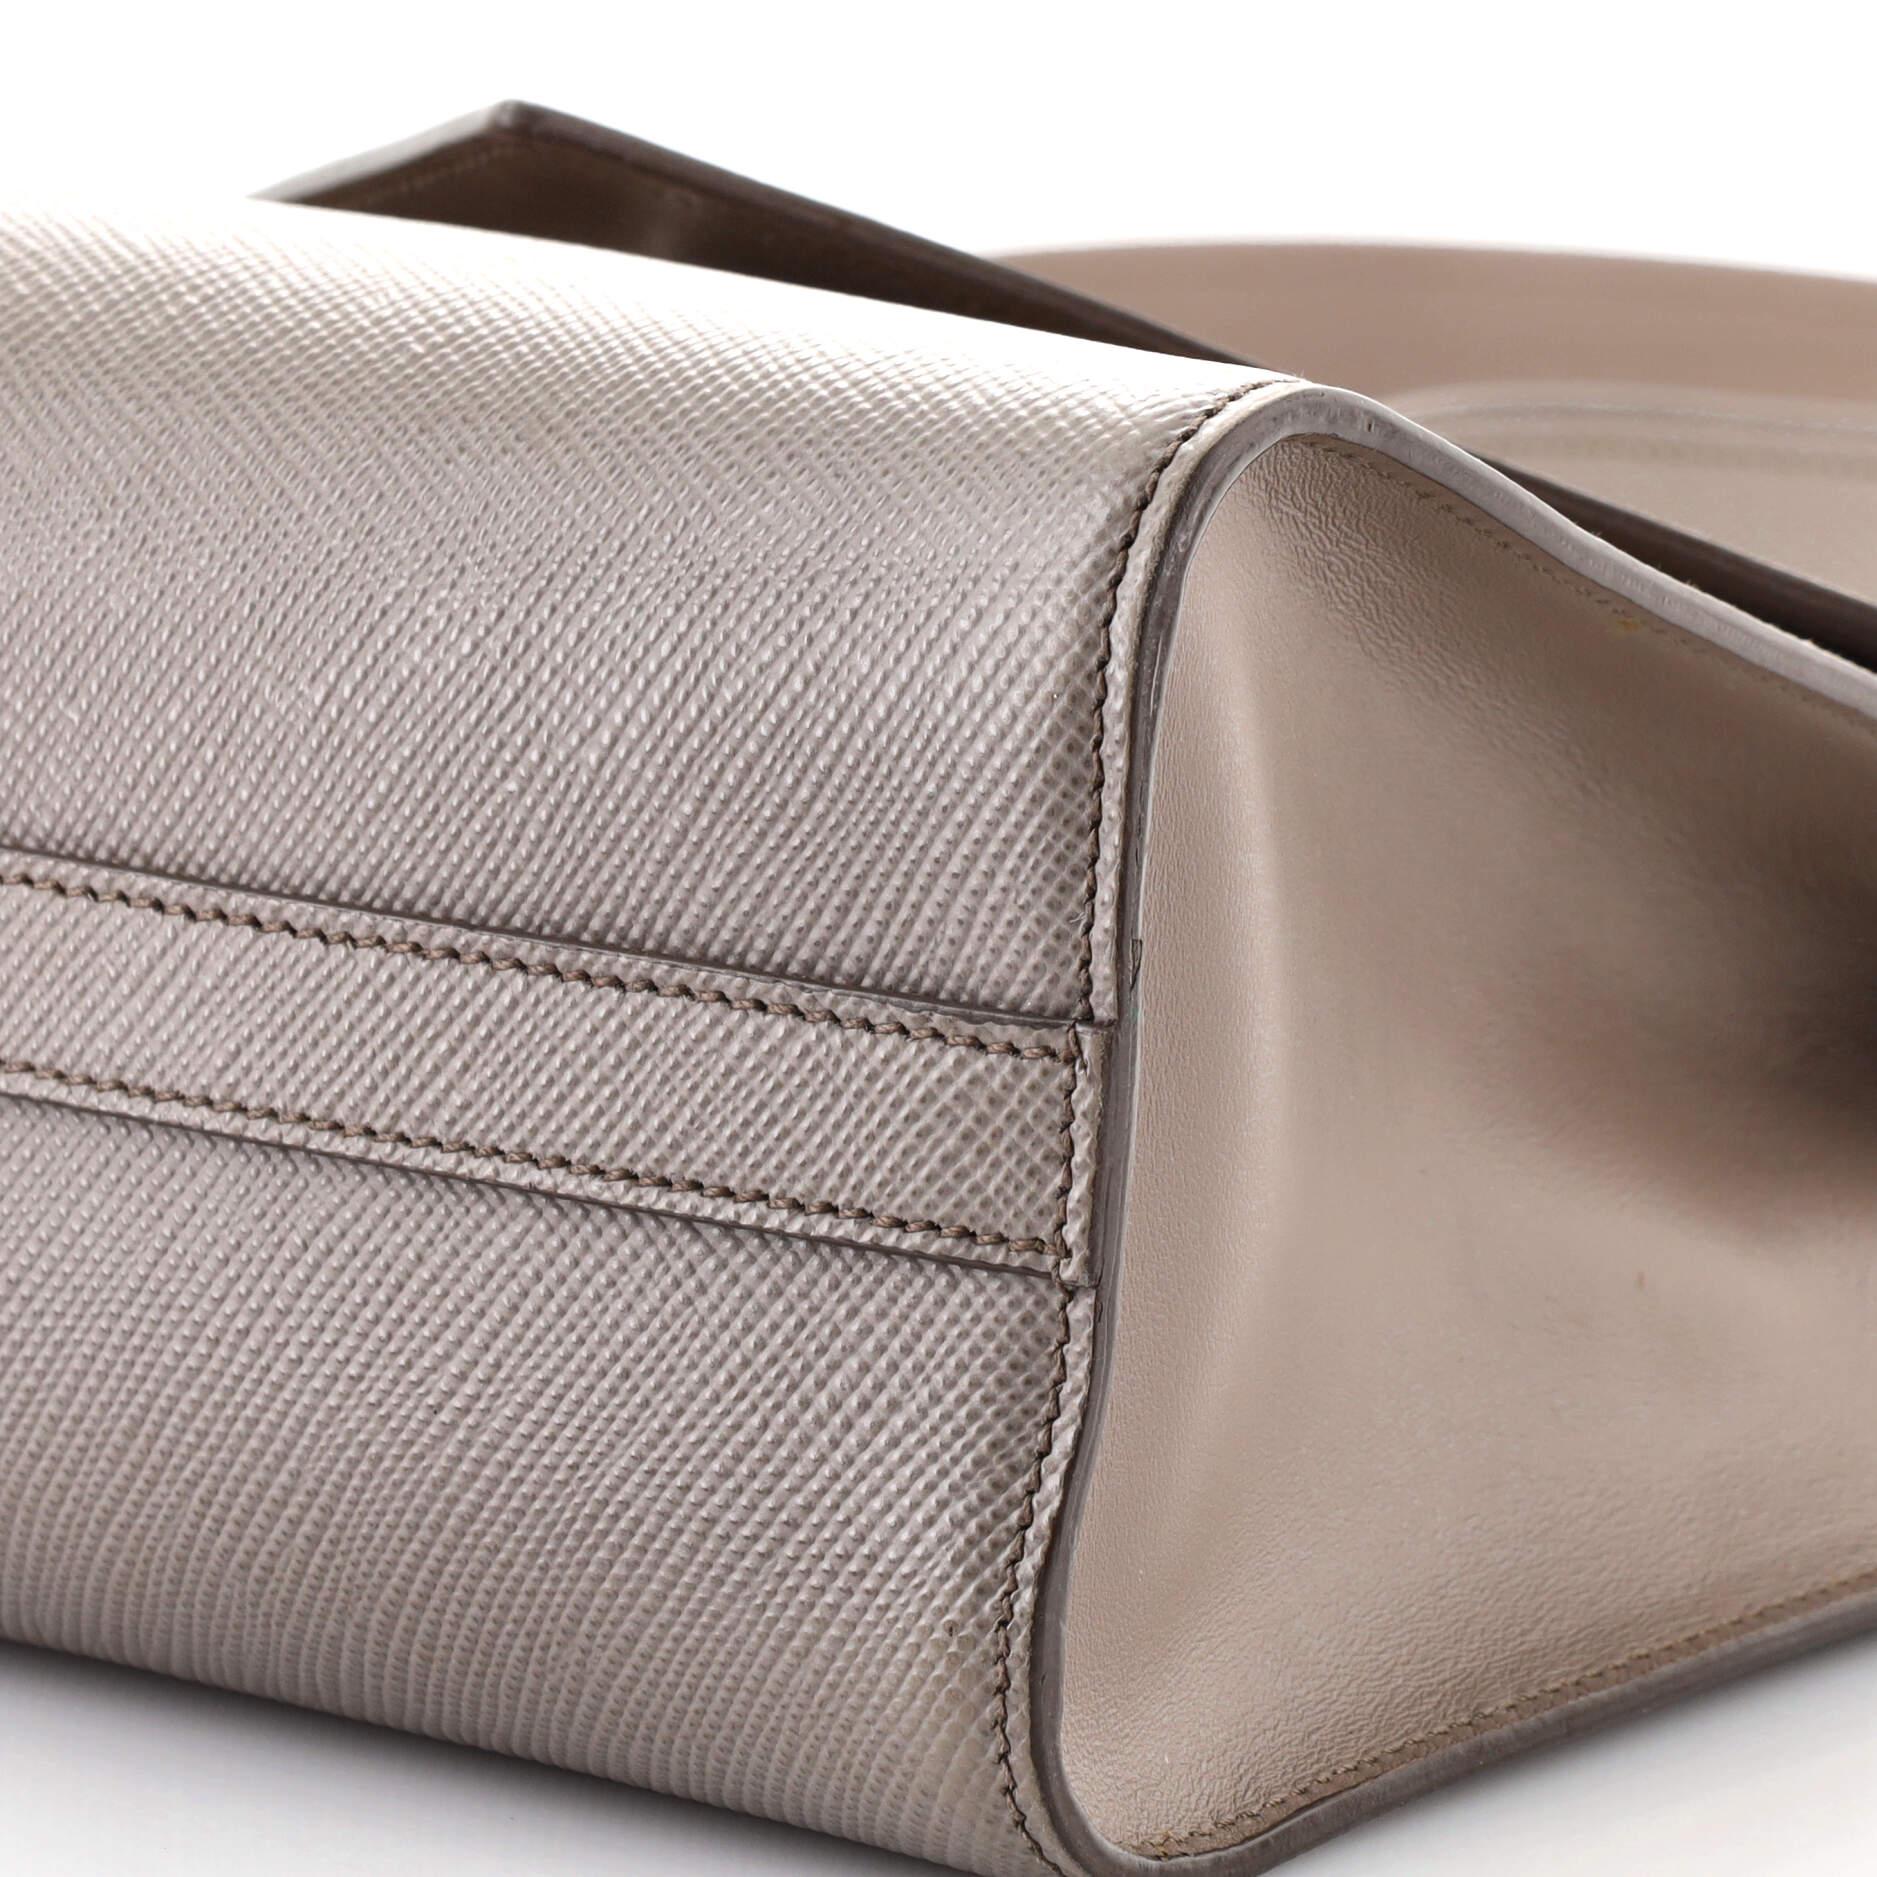 Women's or Men's Prada Monochrome Shoulder Bag Saffiano Leather Medium